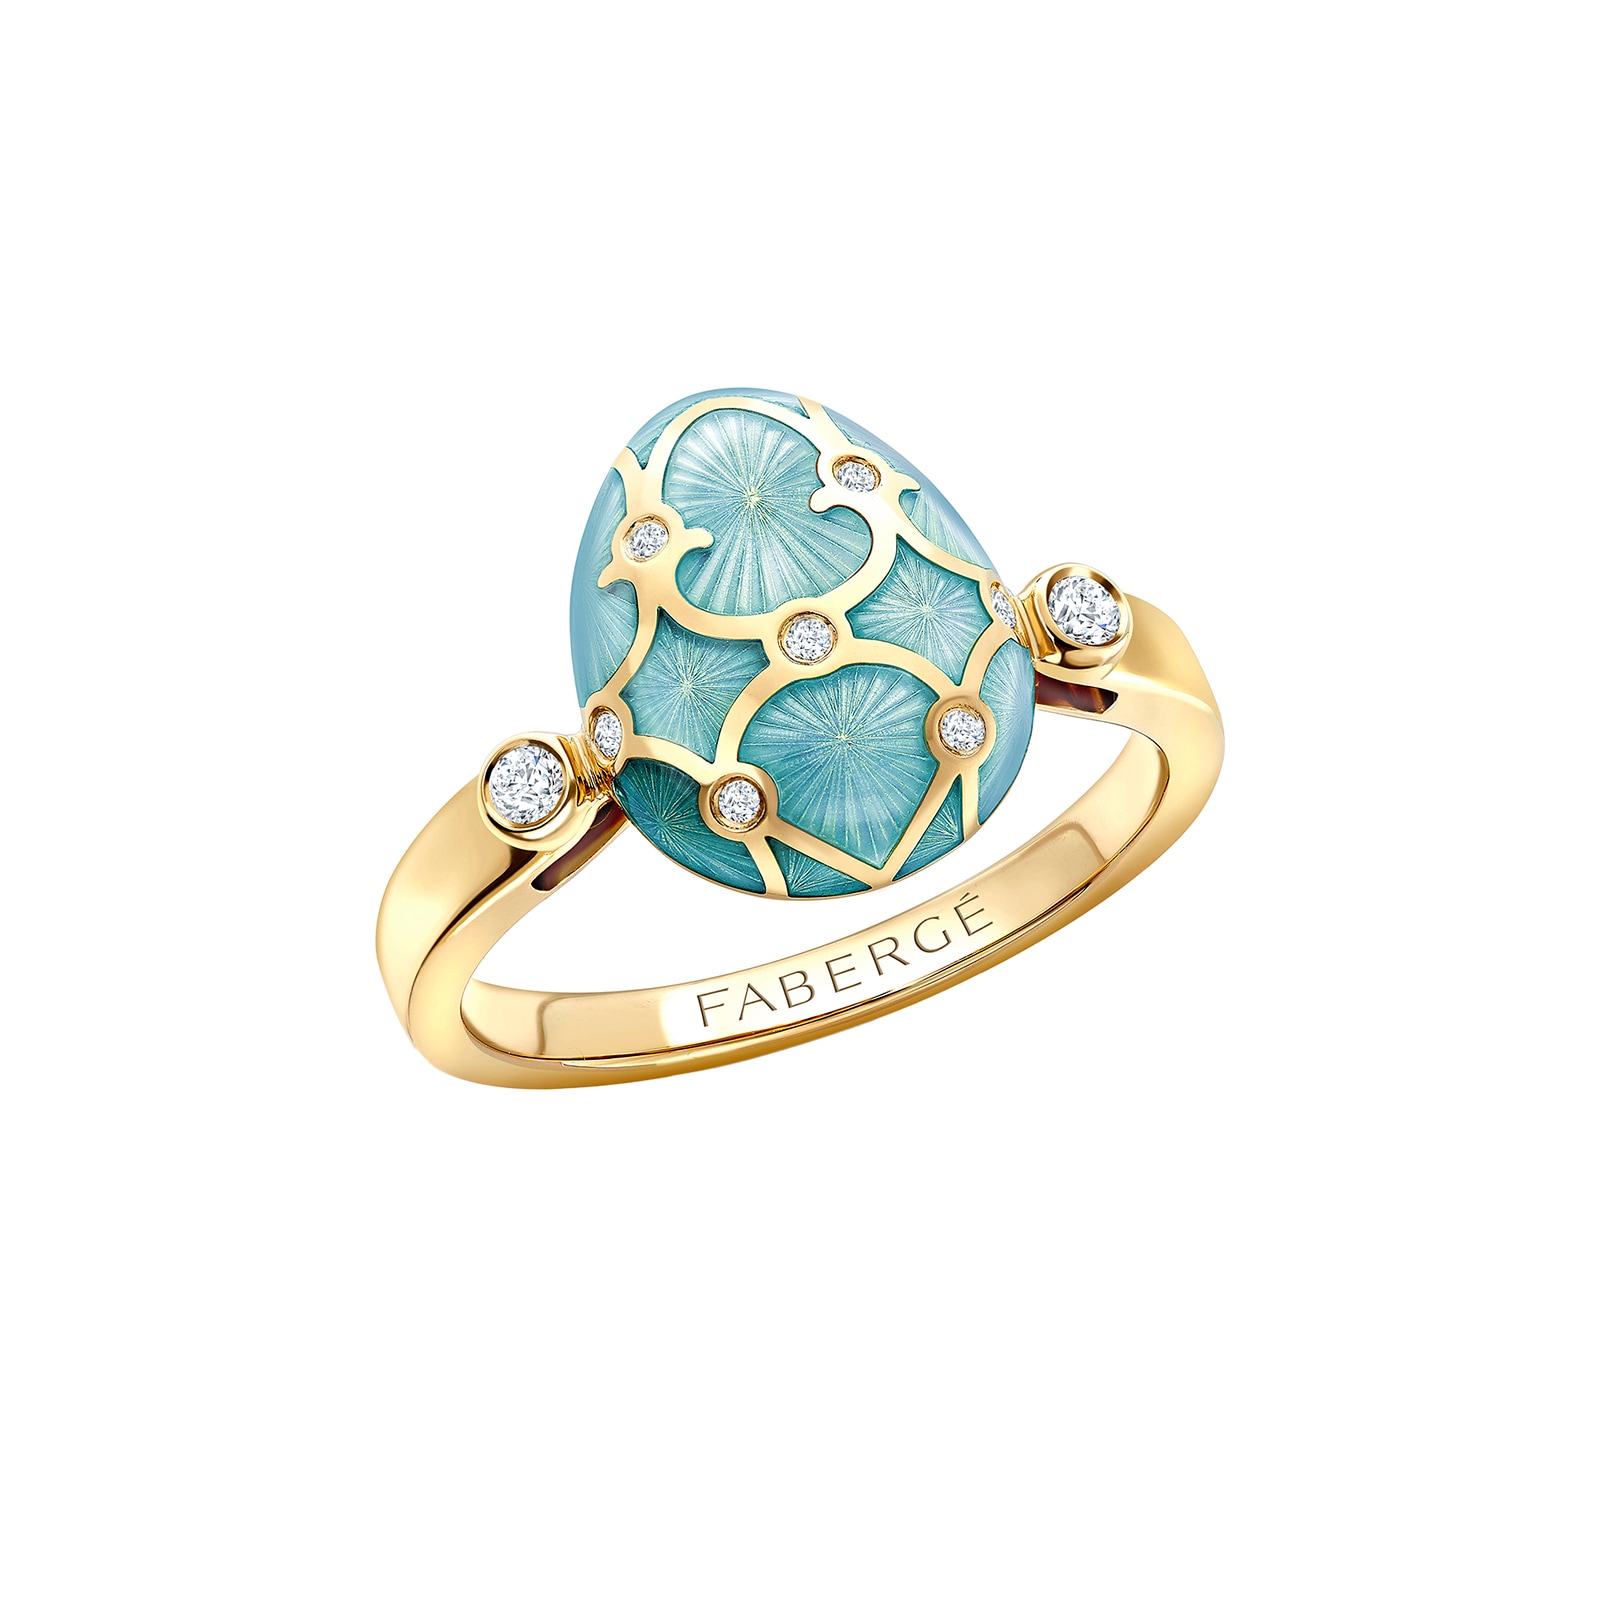 Heritage 18ct Yellow Gold Diamond & Tourquoise Enamel Egg Ring - Ring Size J